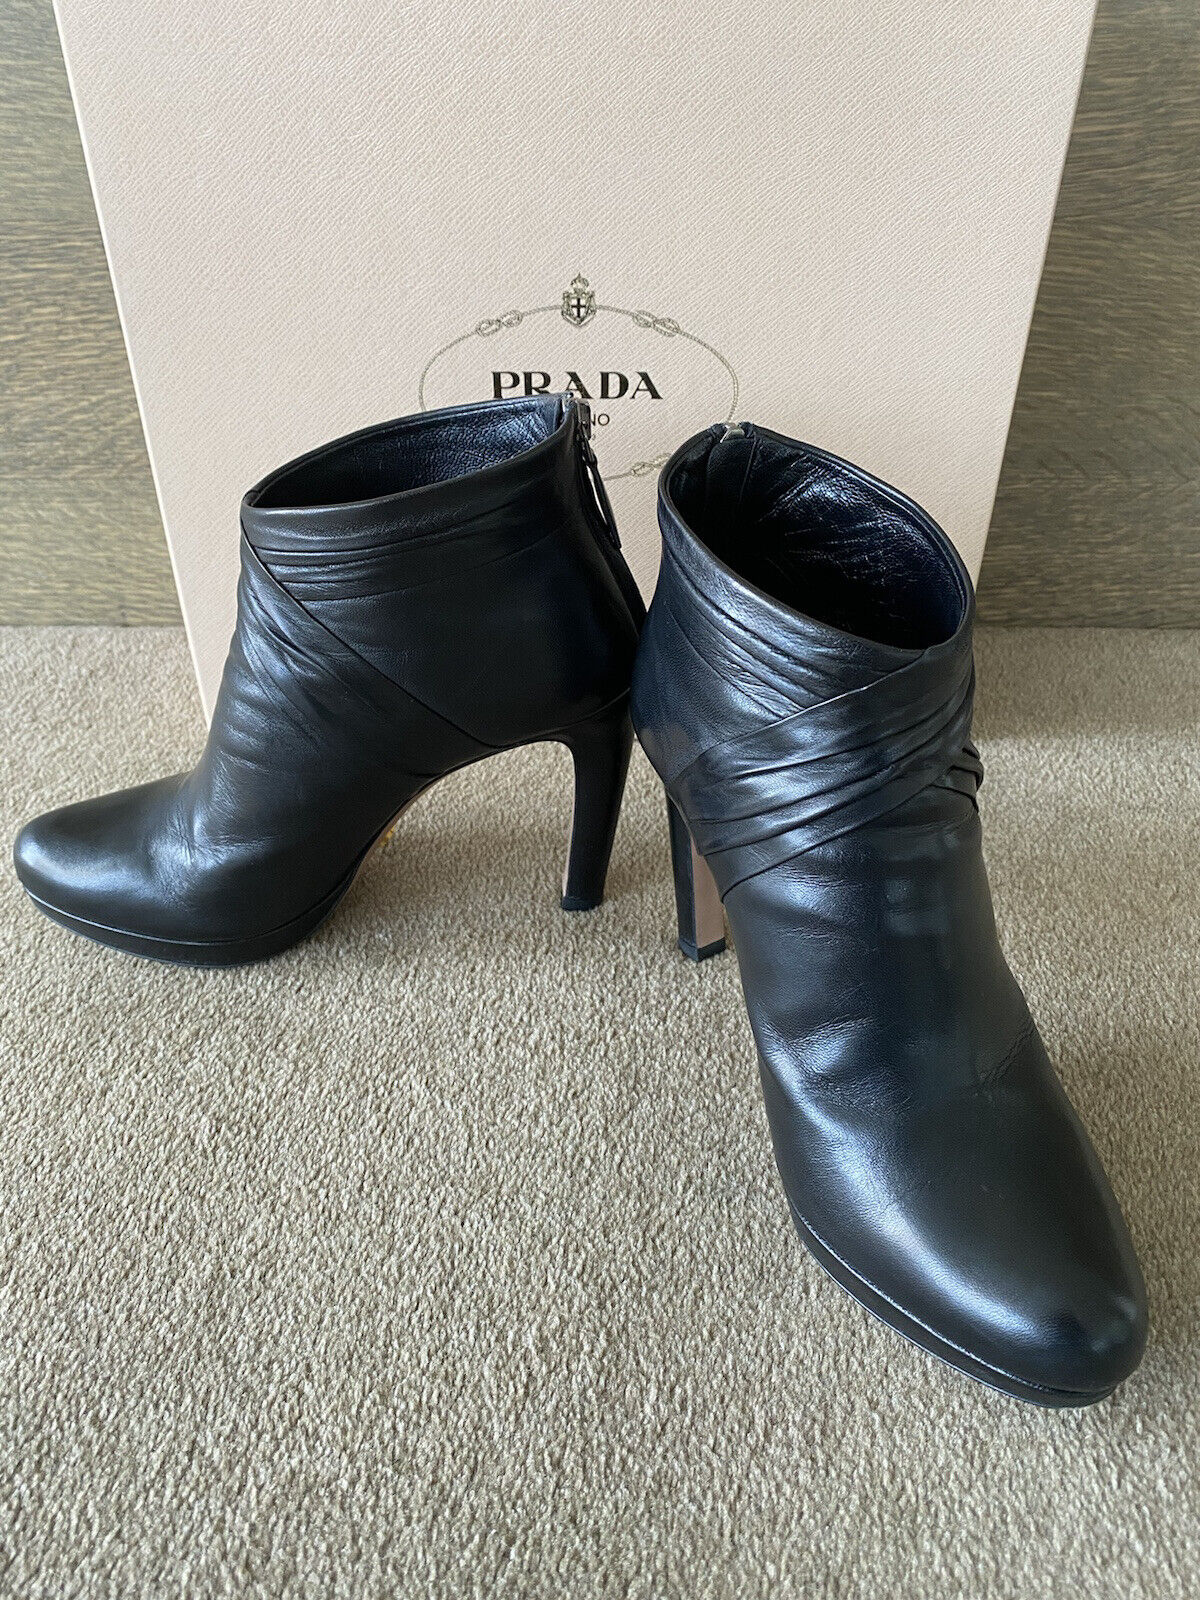 prada boots | eBay